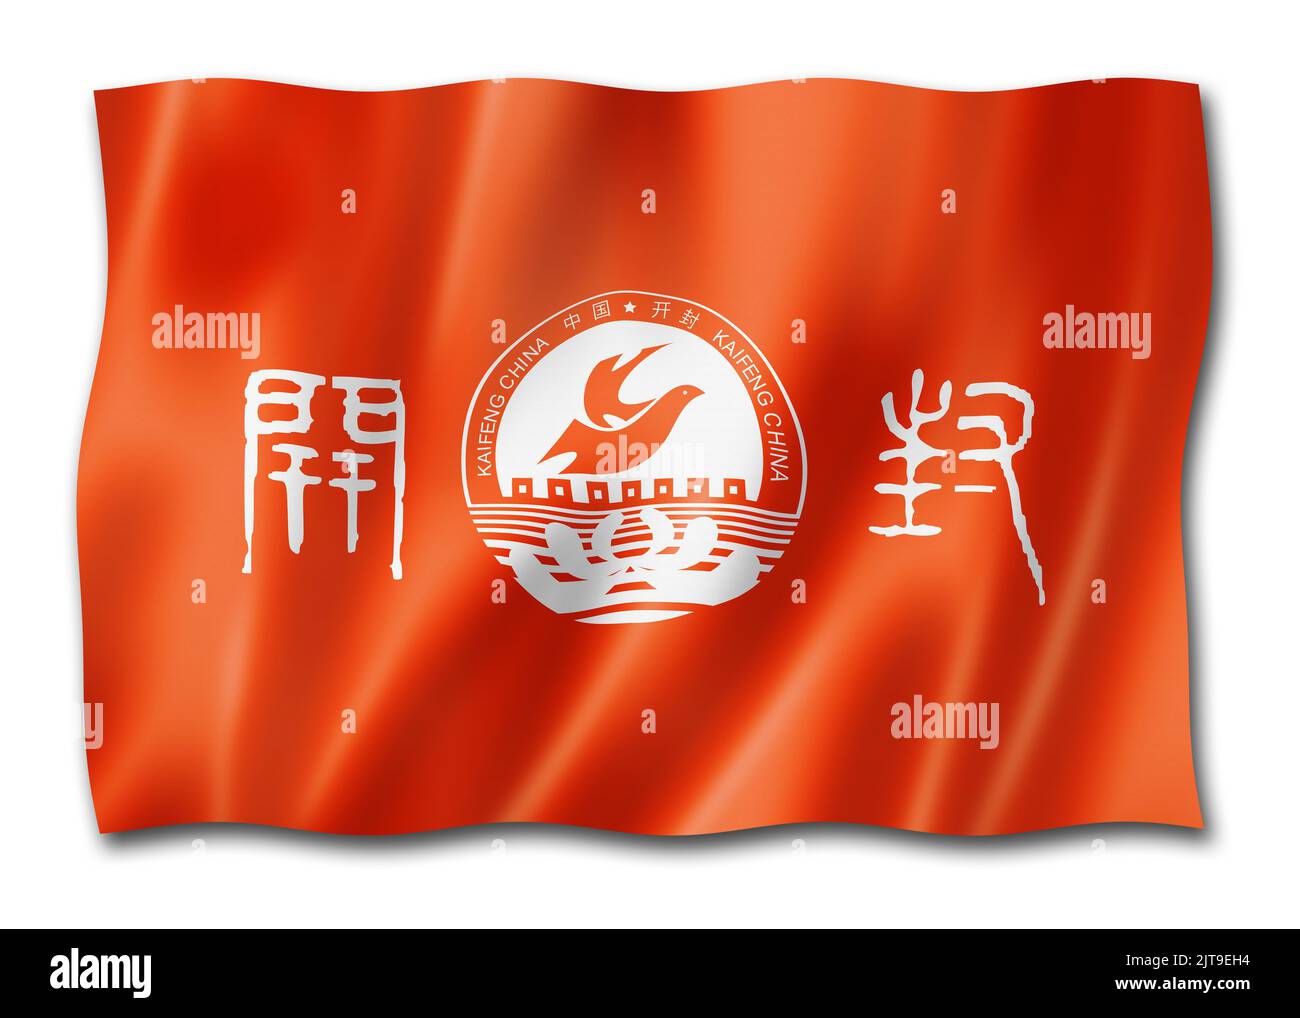 Kaifeng city flag, China waving banner collection. 3D illustration Stock Photo